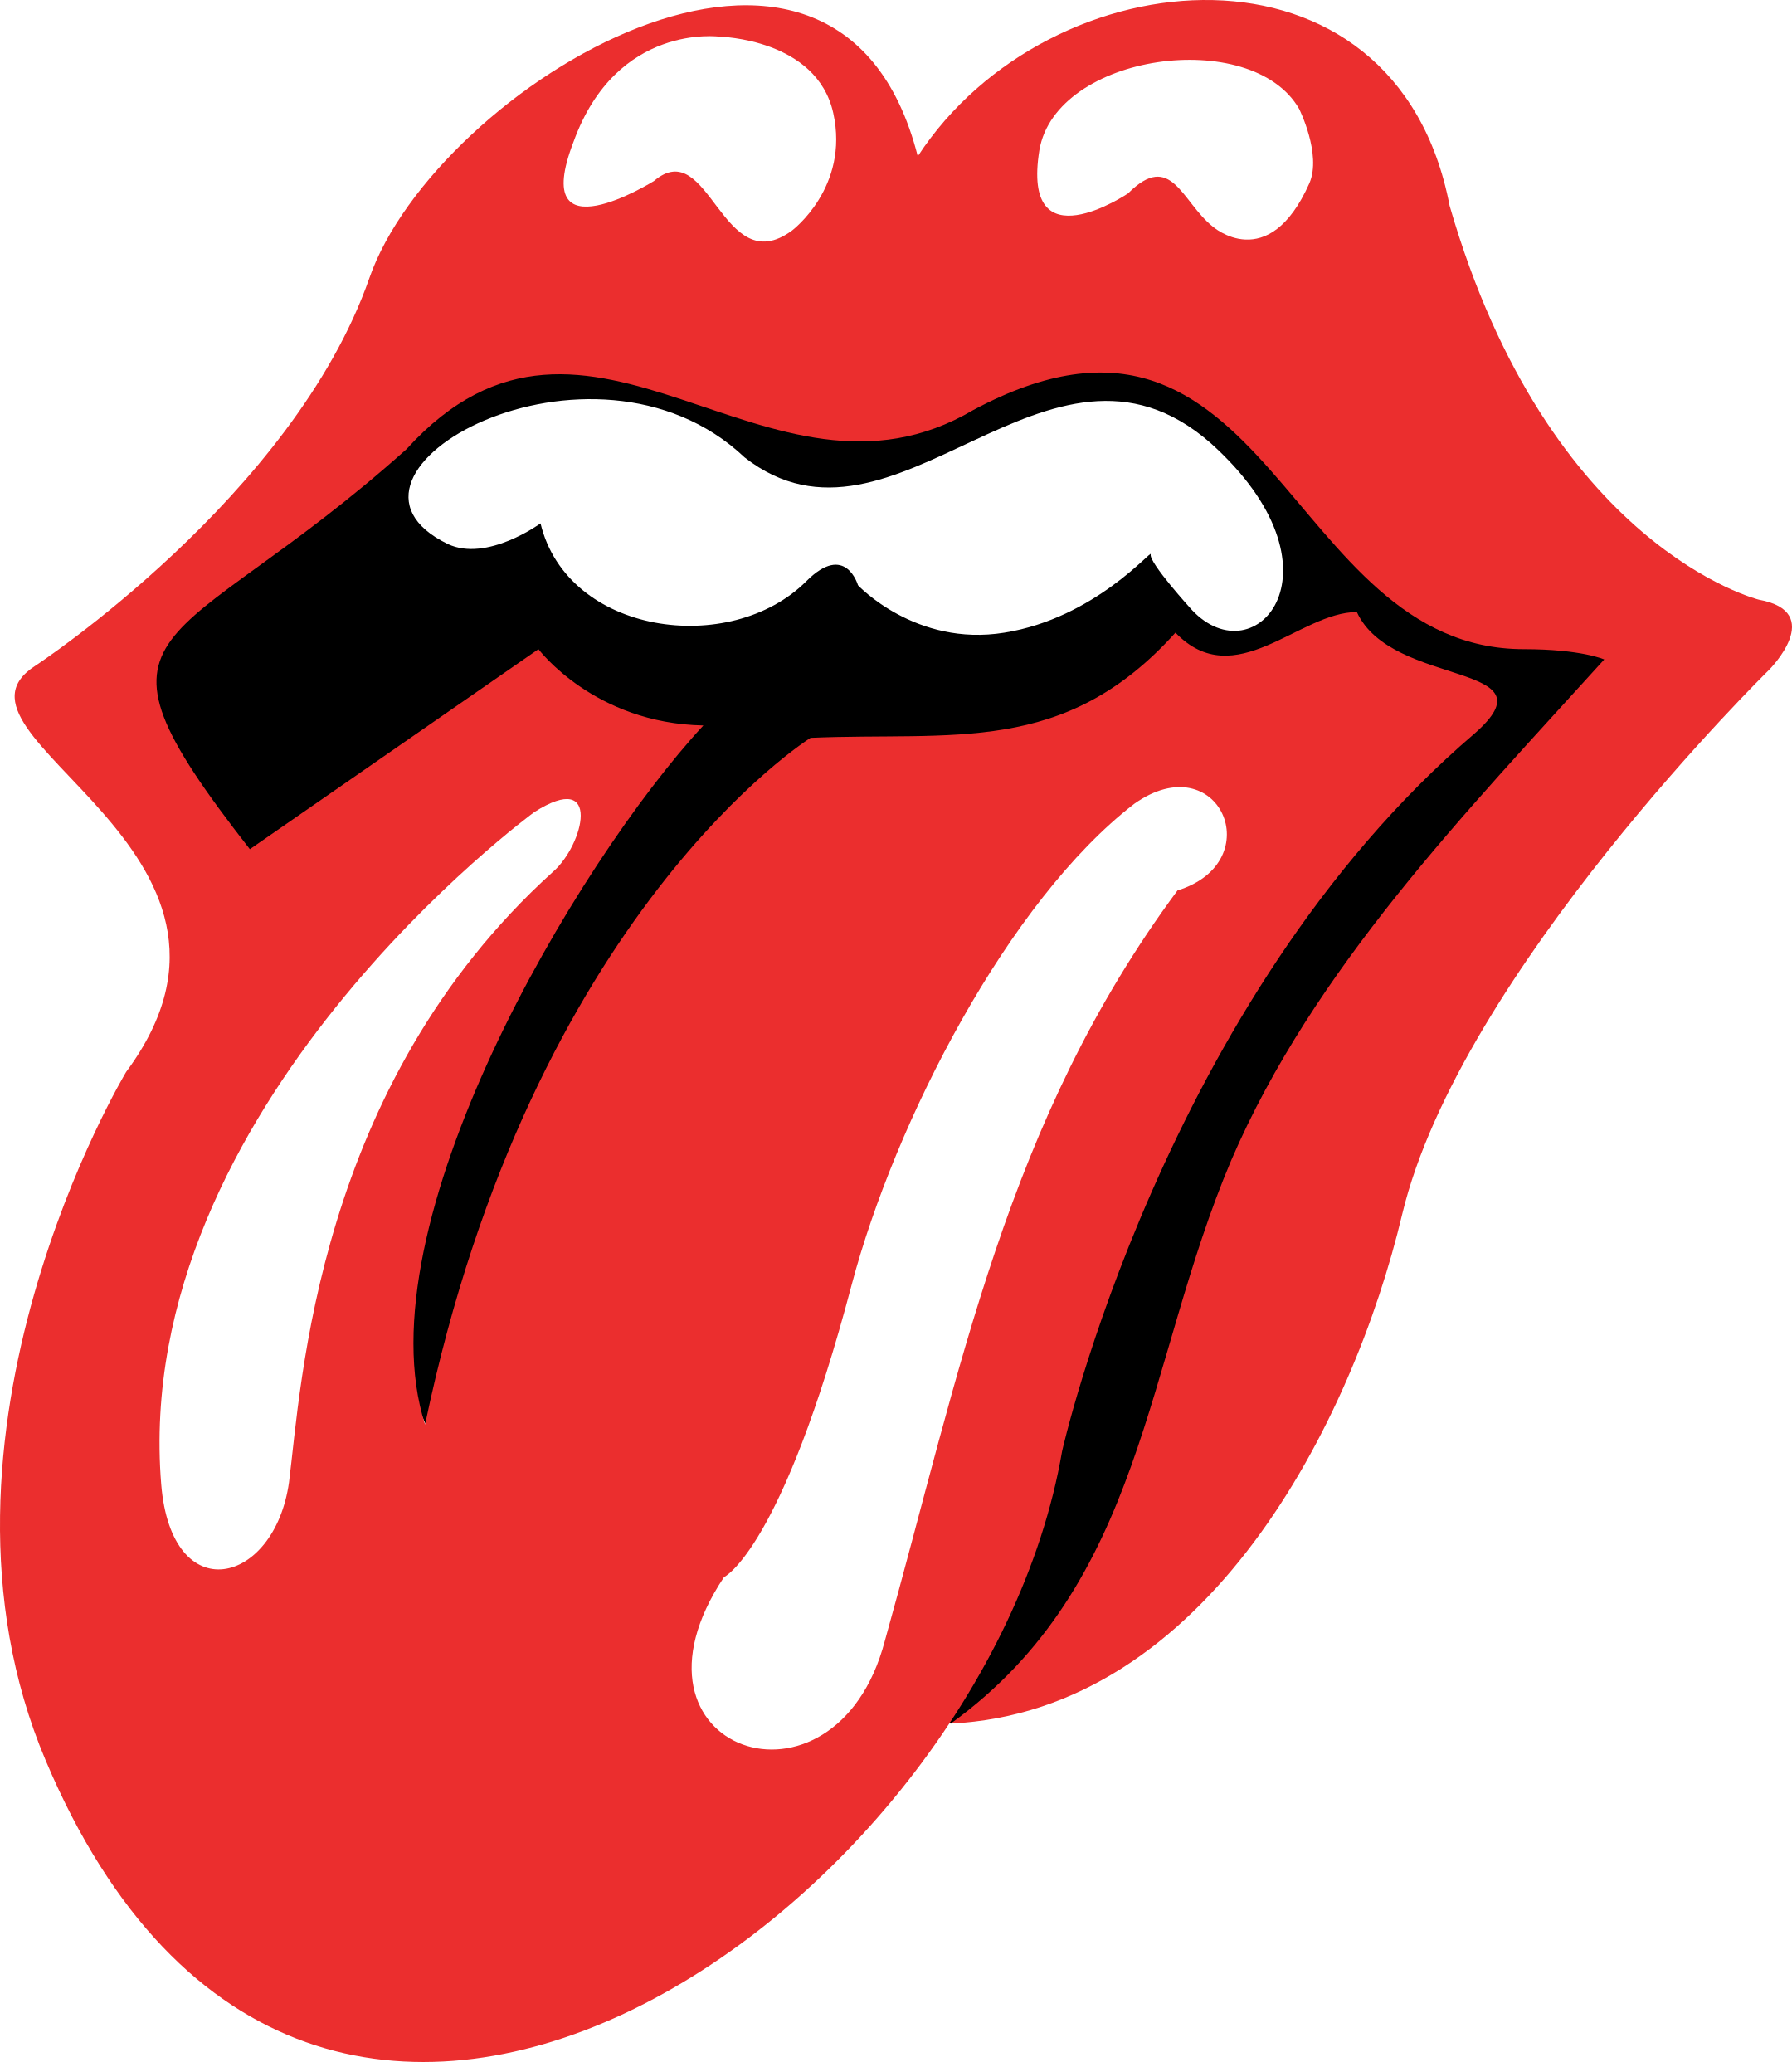 rolling stones logo 1 - The Rolling Stones Logo